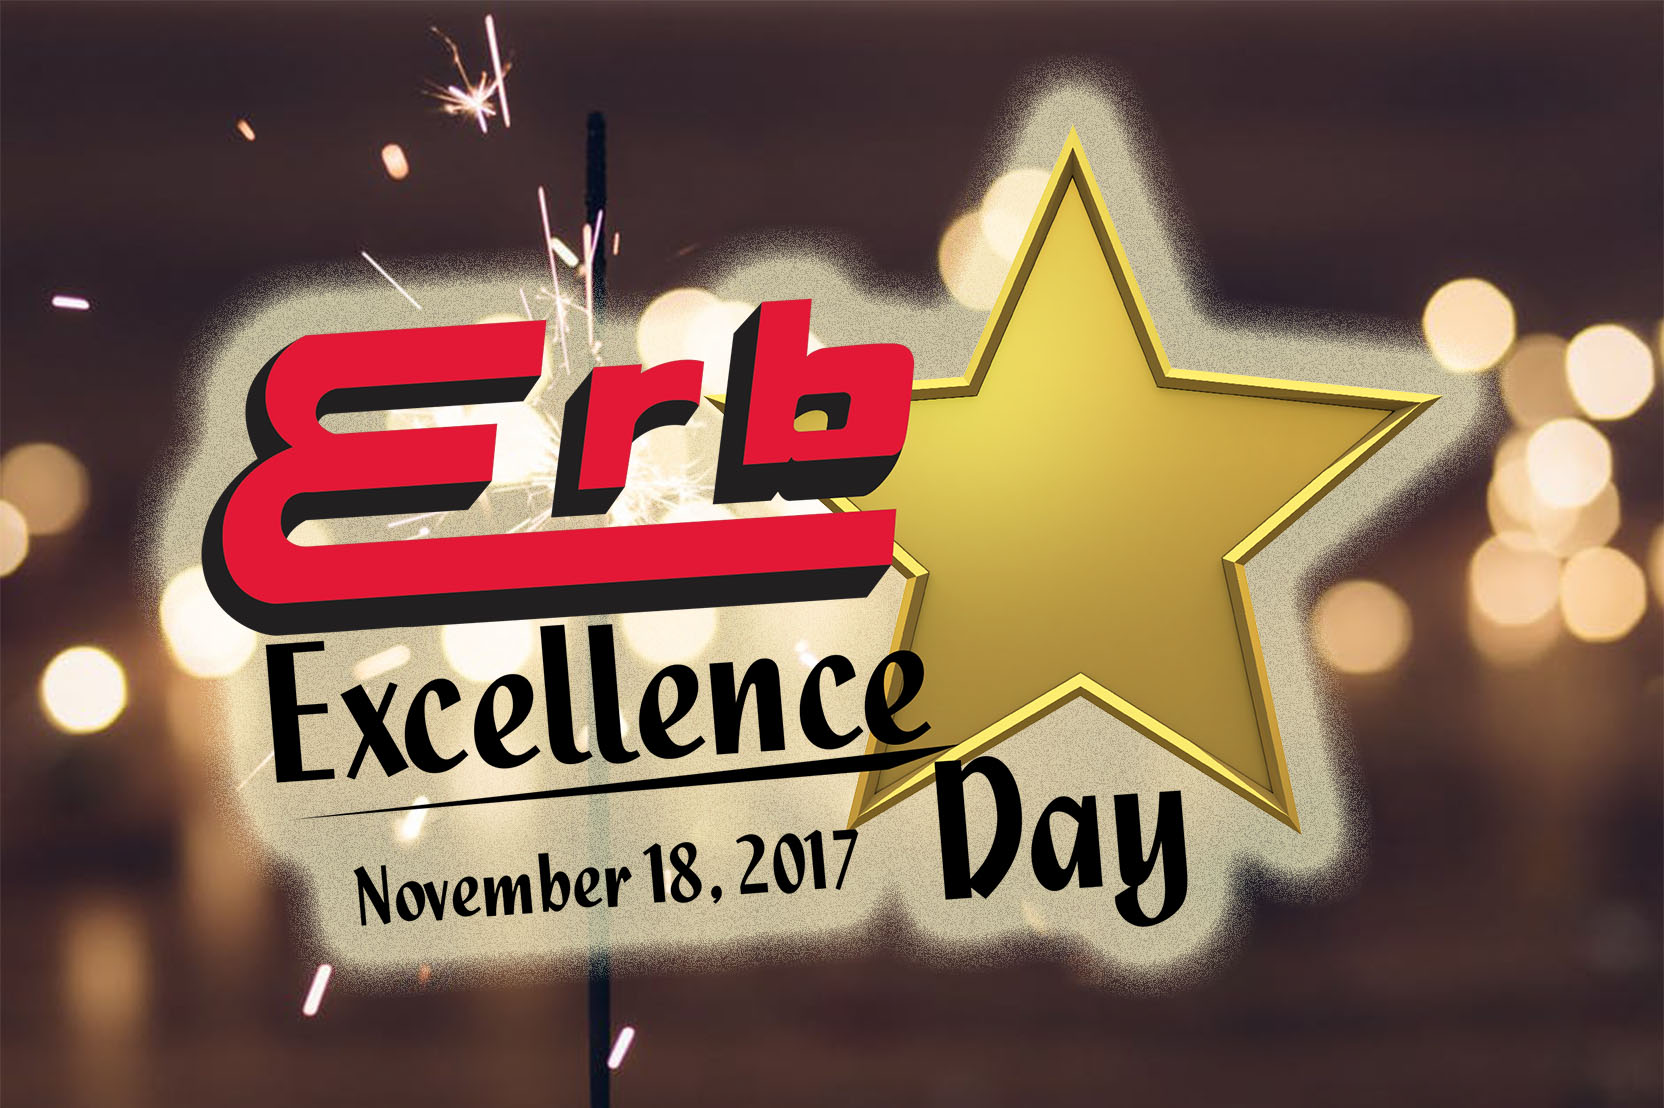 Employee Appreciation: Erb Excellence Day 2017